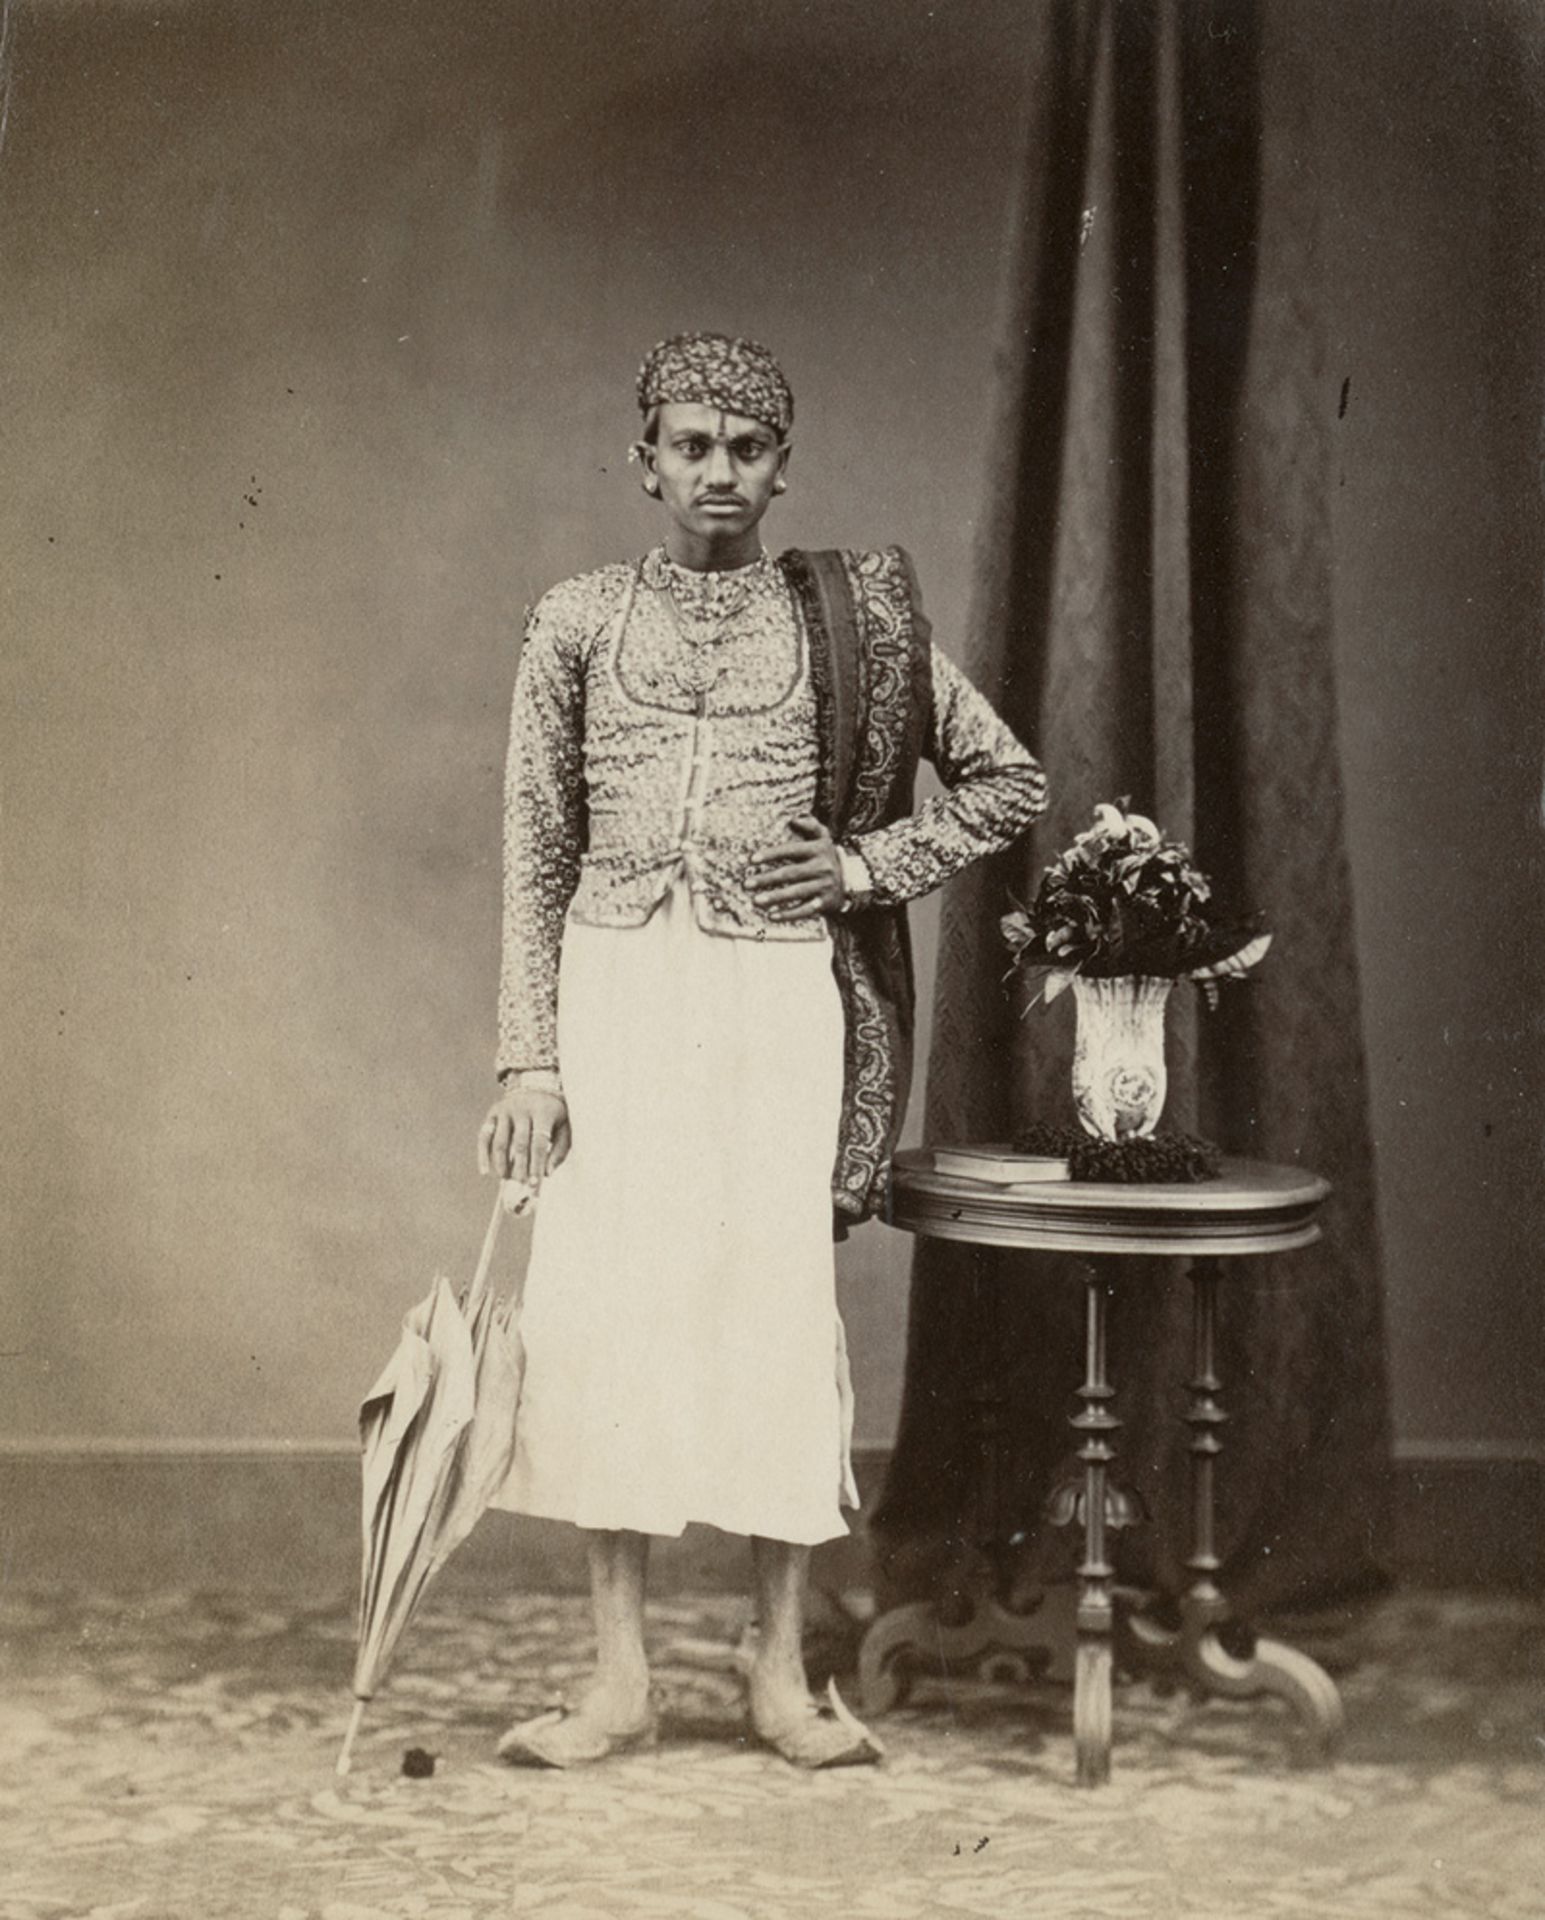 British India: Portraits of servants, street sellers and merchants - Image 3 of 3